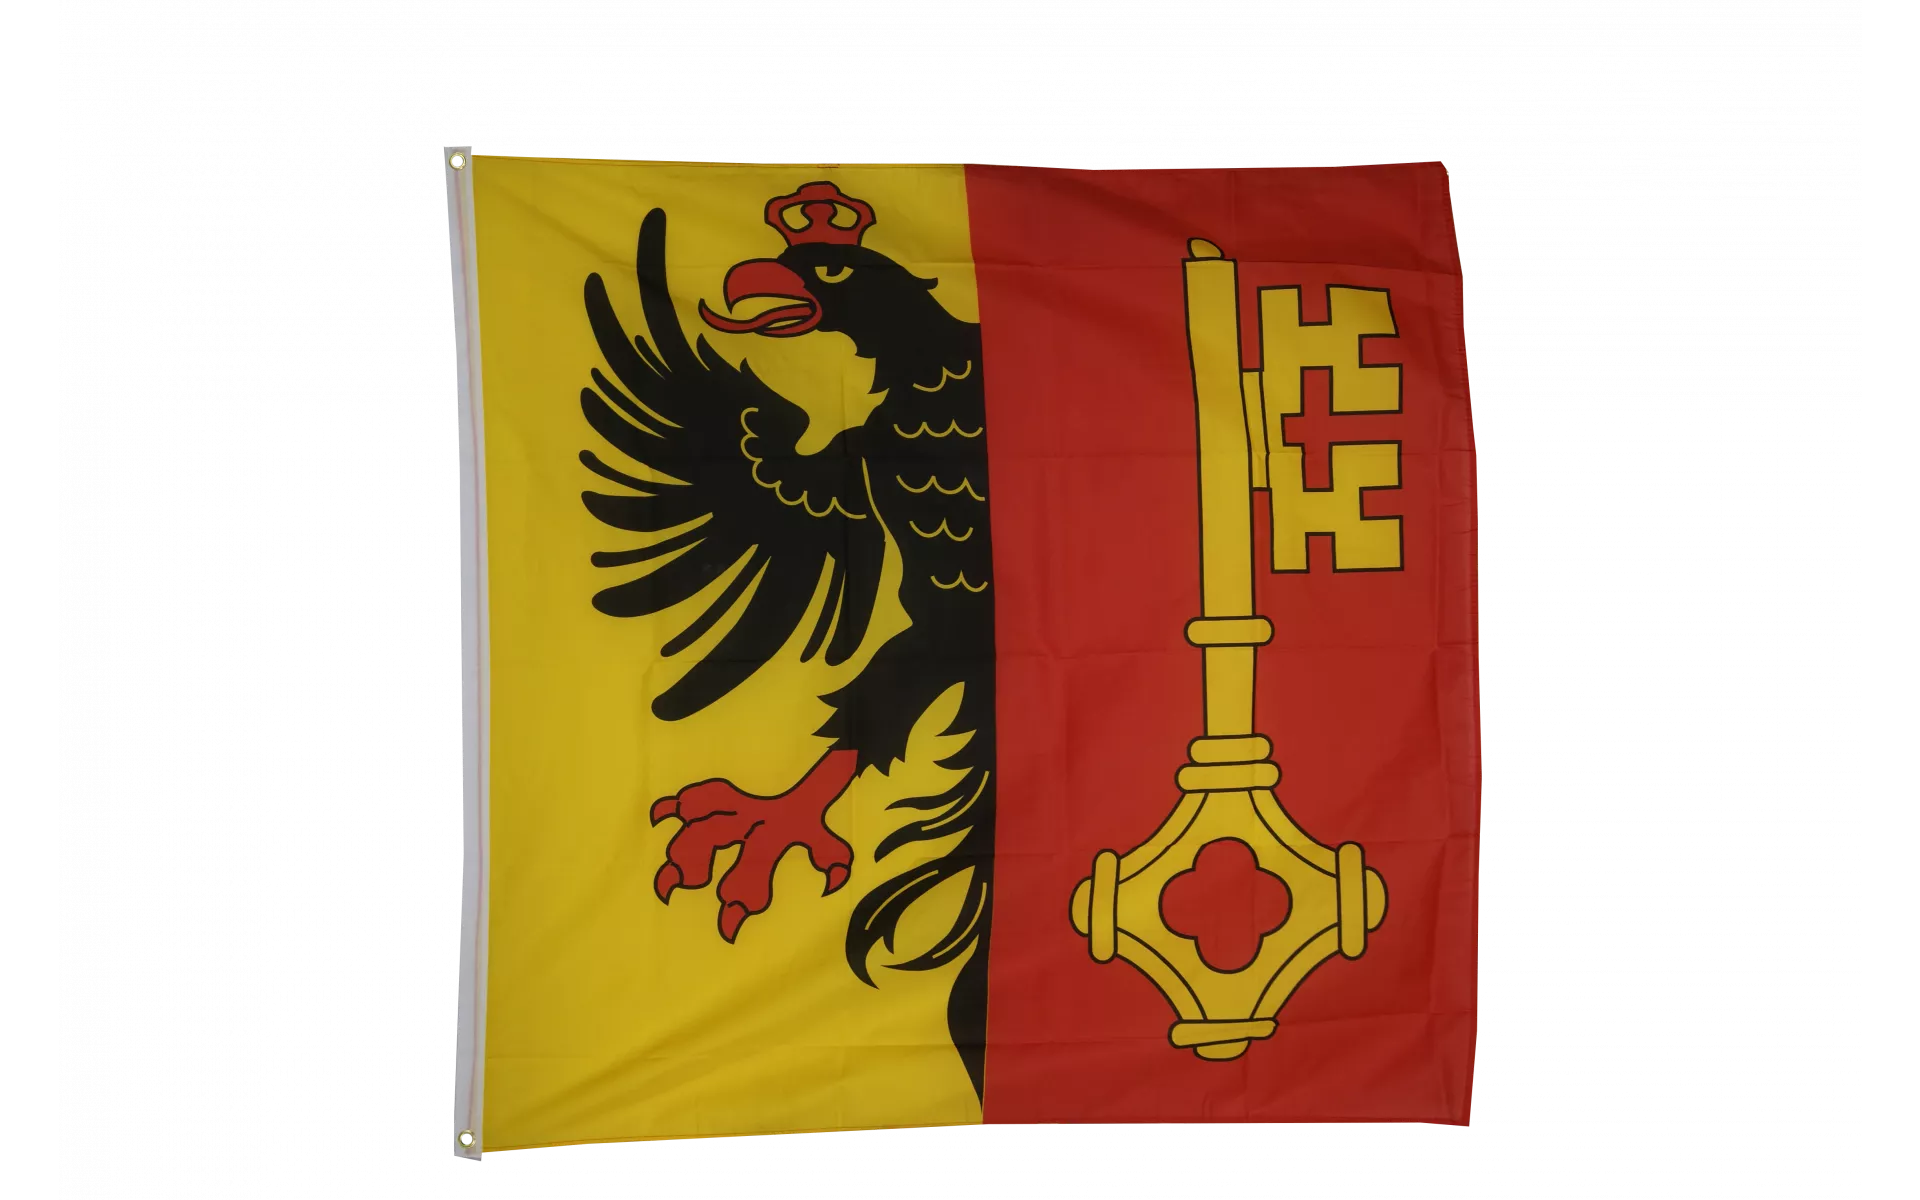 Flagge Fahne Schweiz Kanton Jura Hissflagge 120 x 120 cm 